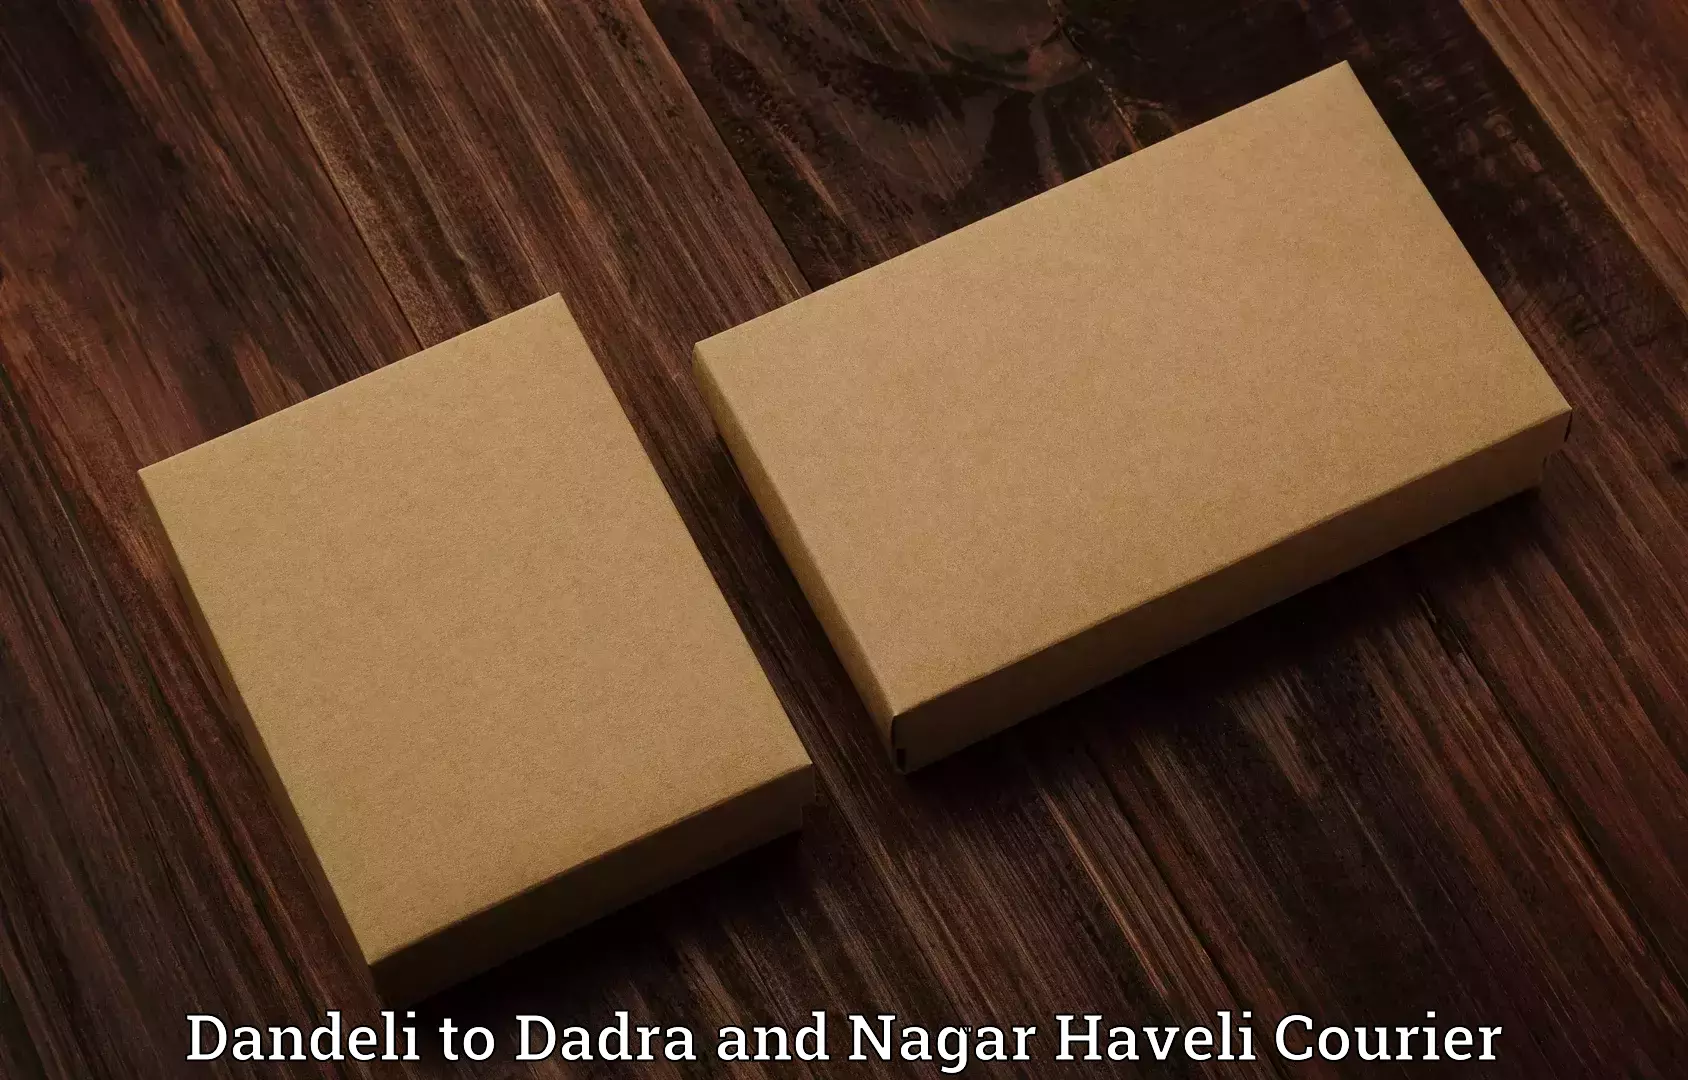 Luggage transport company Dandeli to Dadra and Nagar Haveli